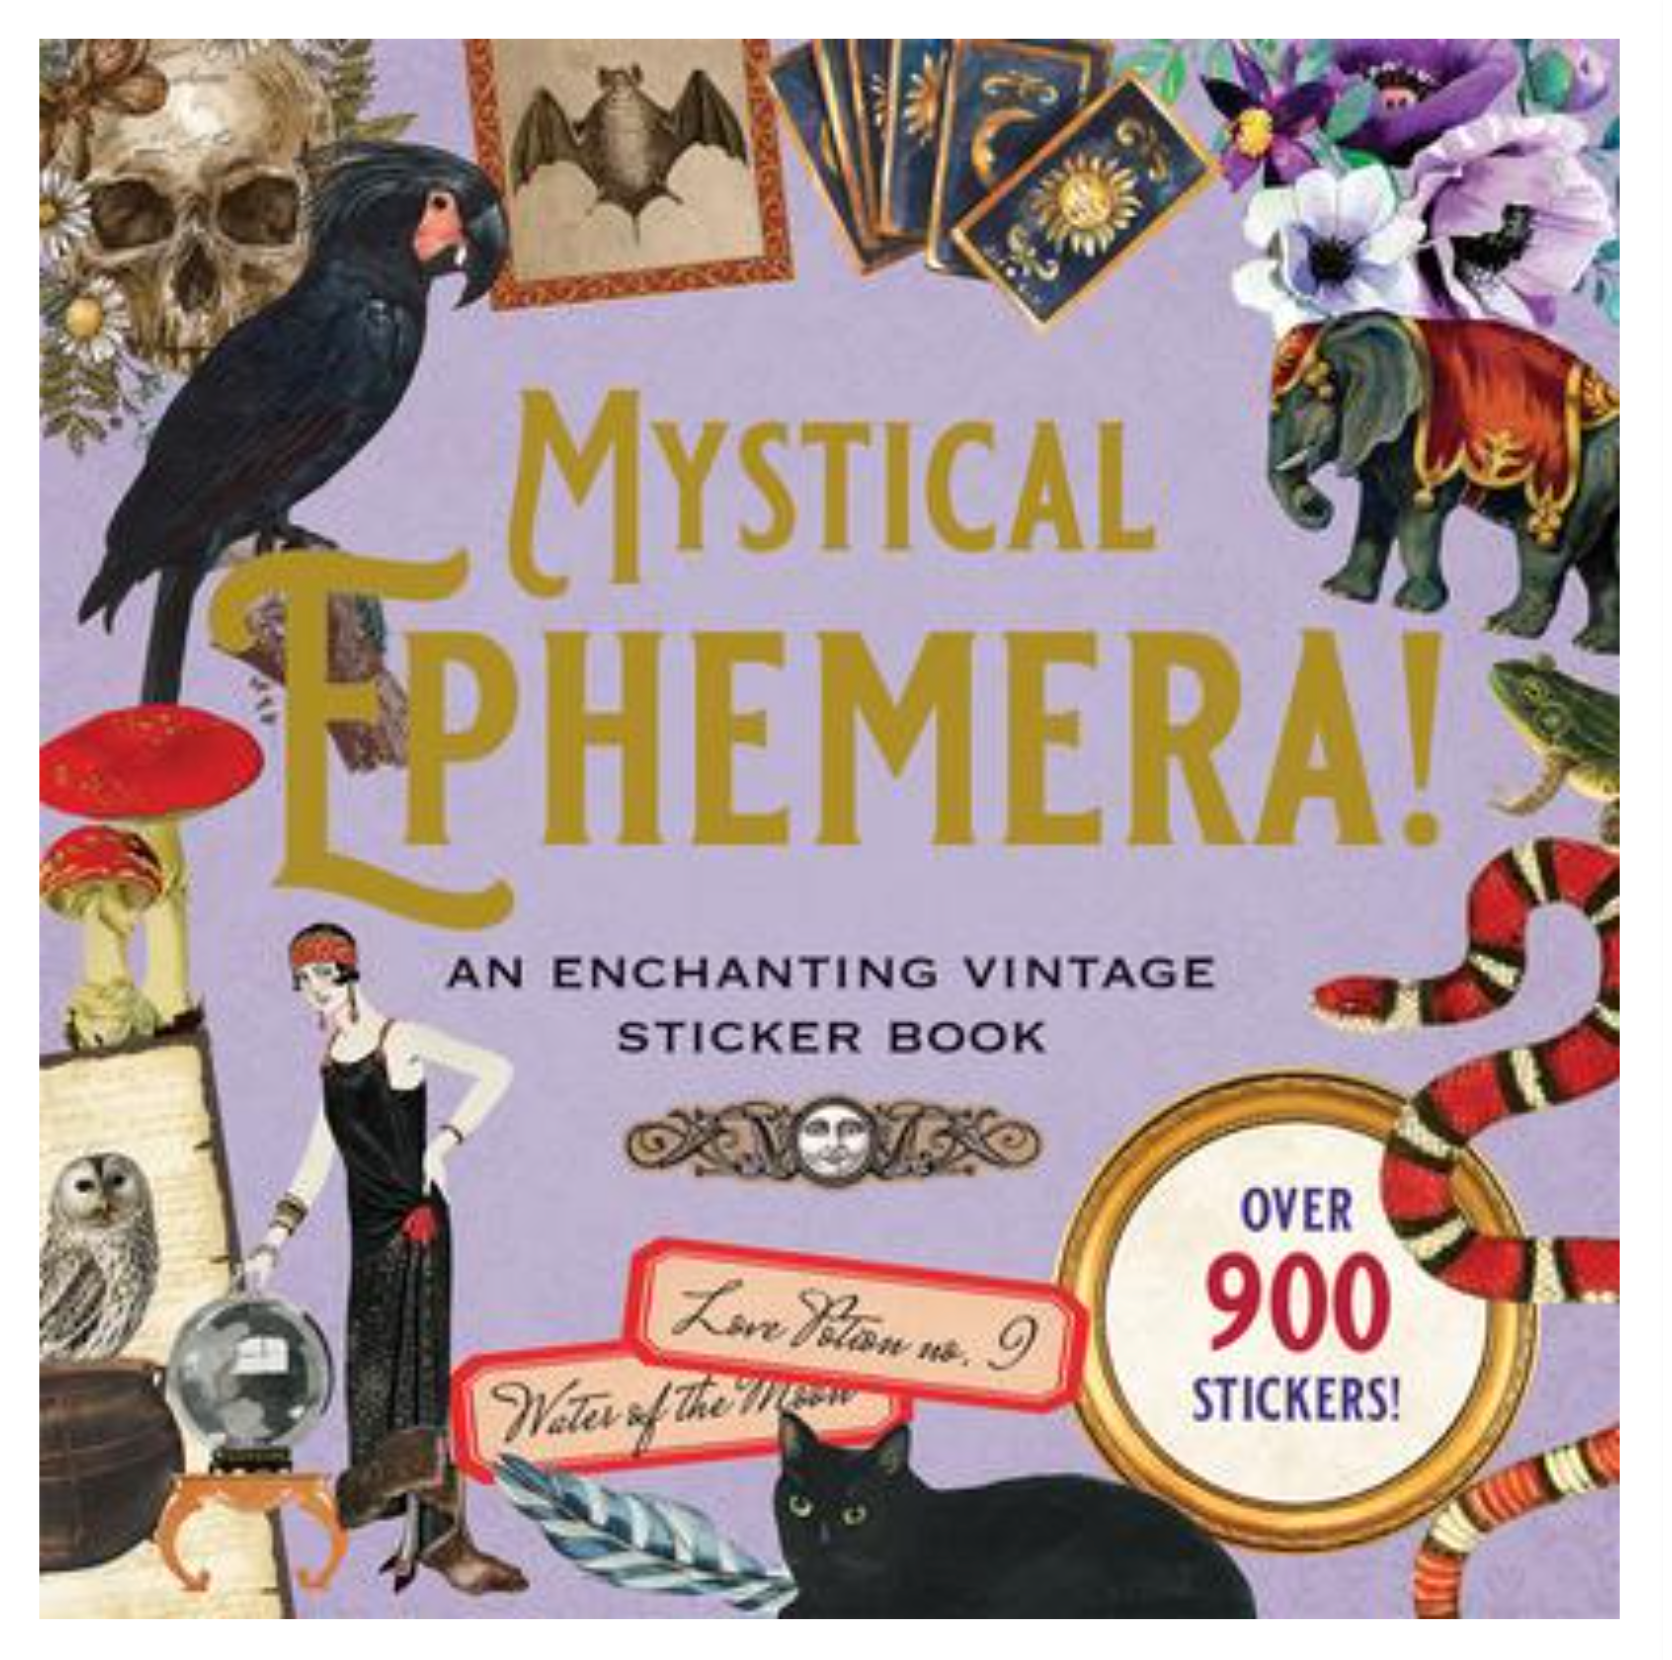 Mystical Ephemera Sticker Book